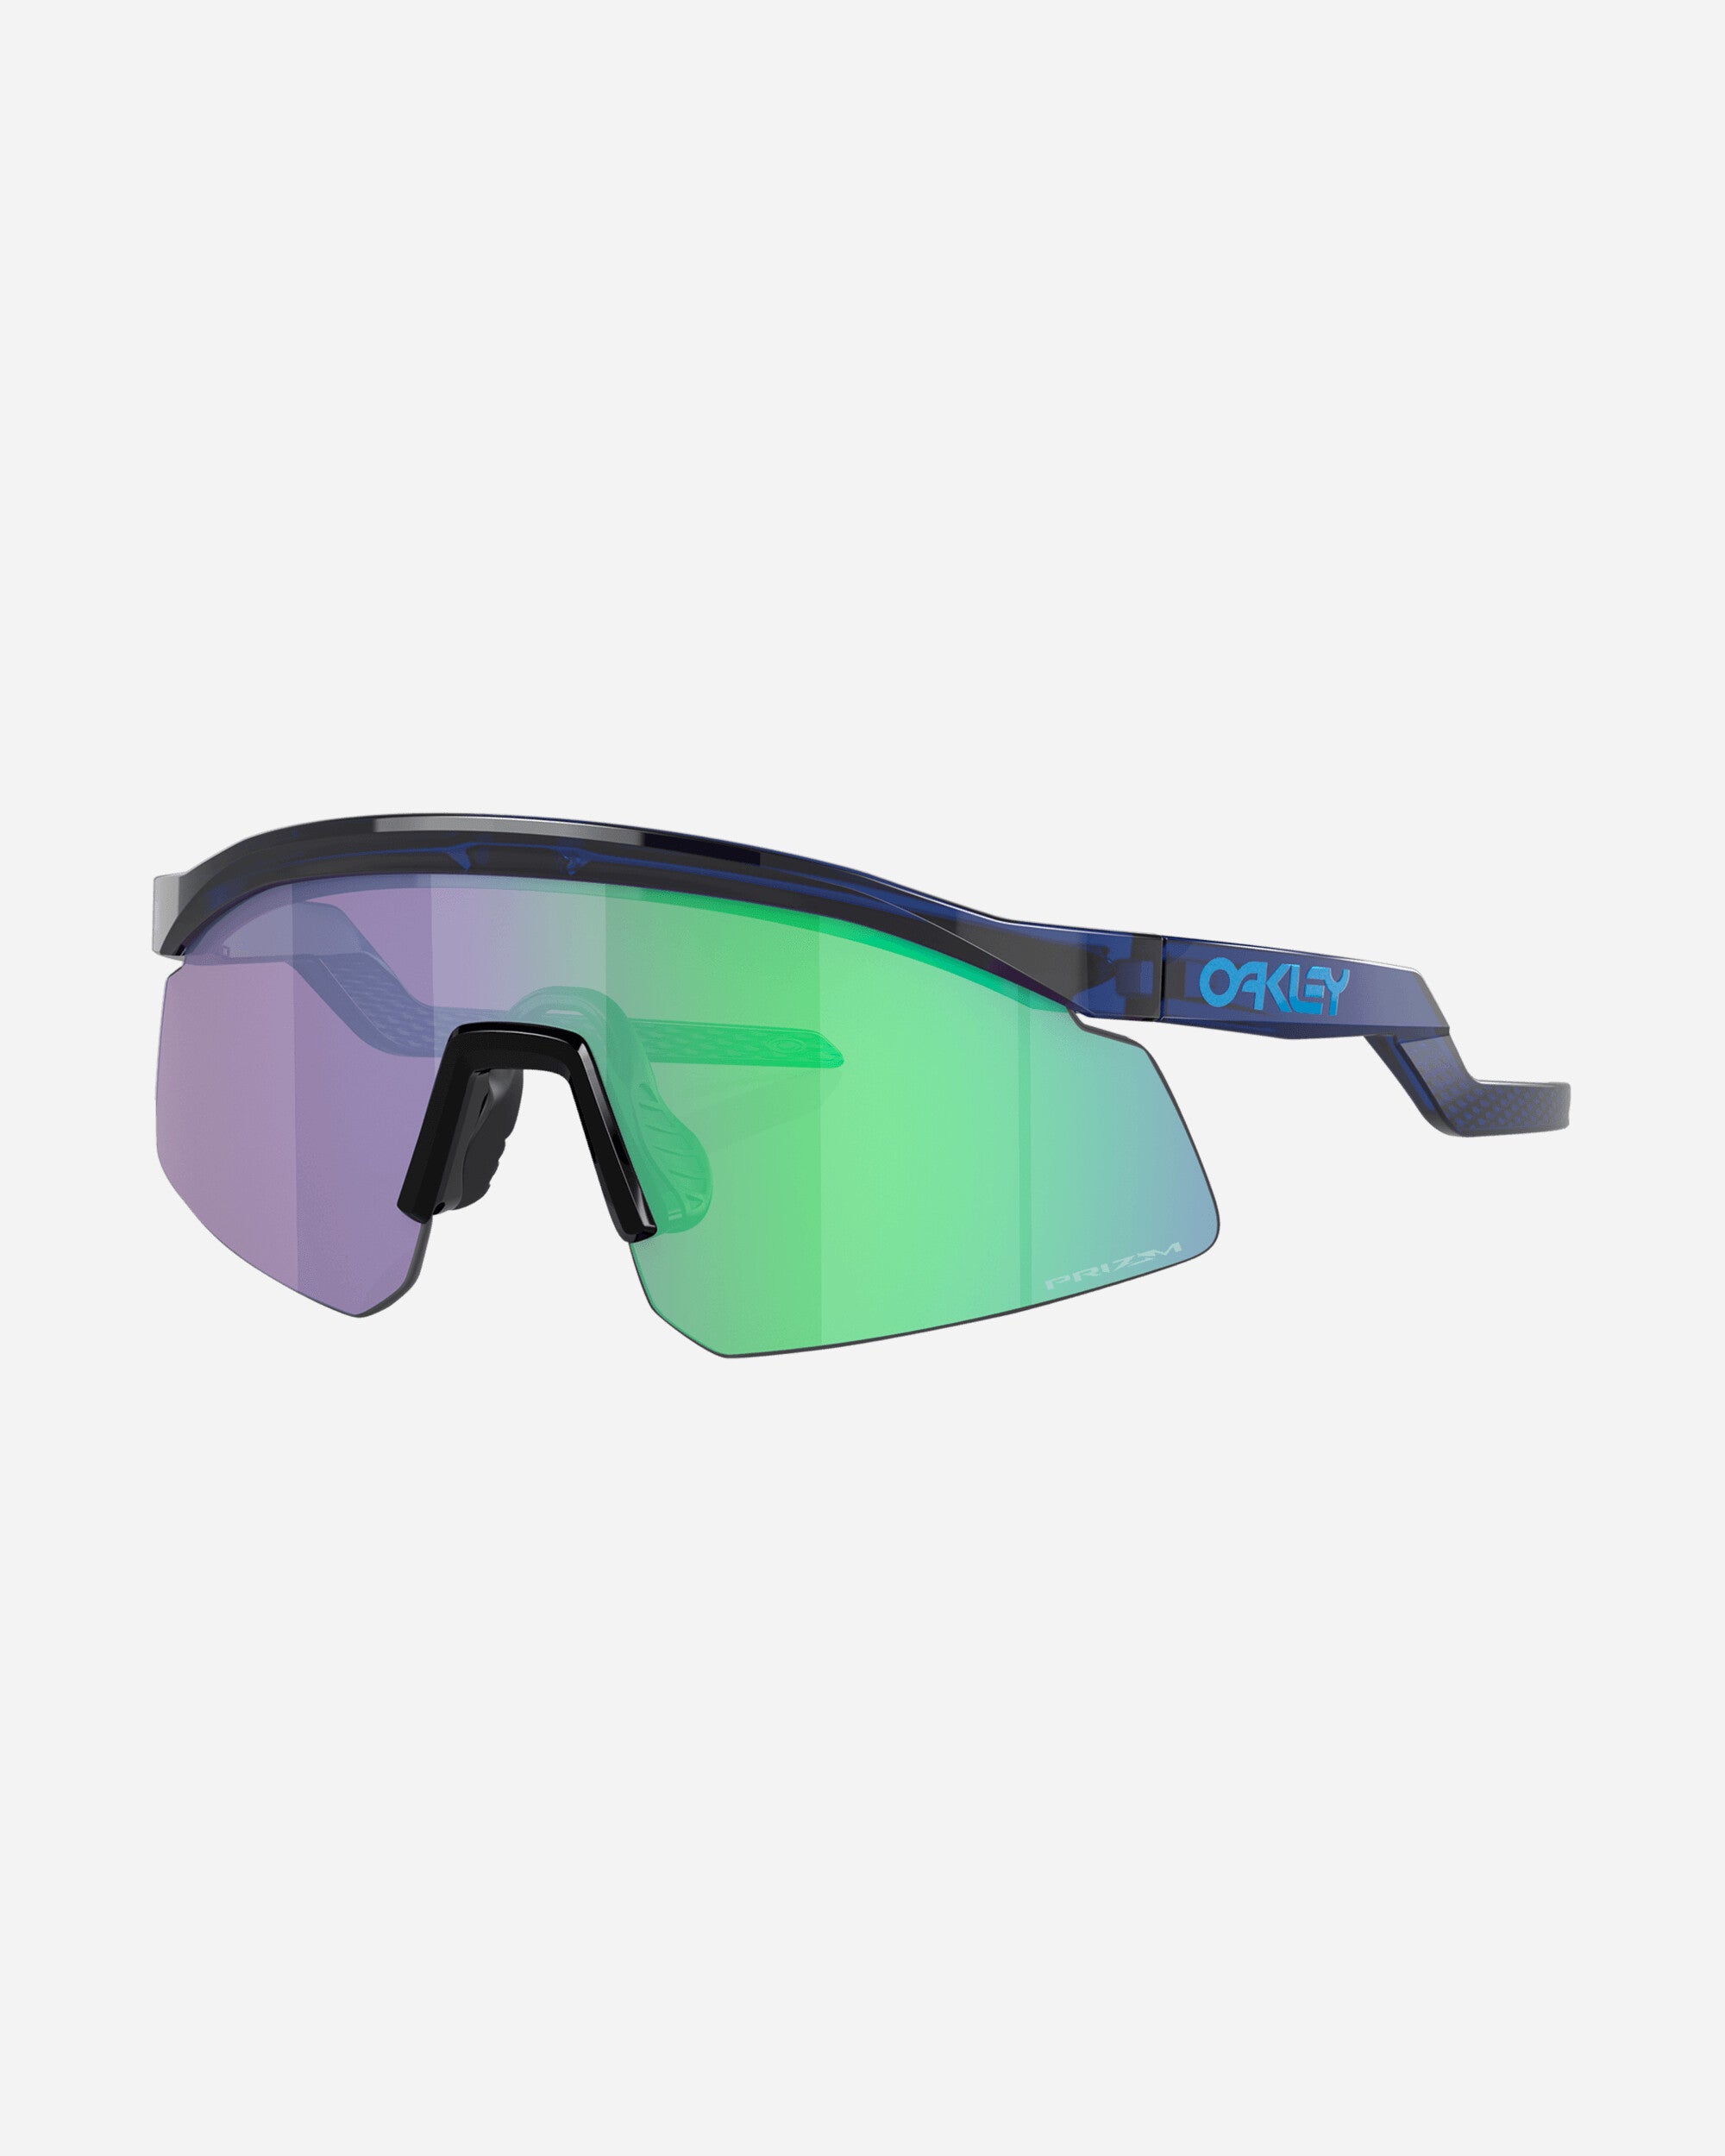 Hydra Sunglasses Translucent Blue